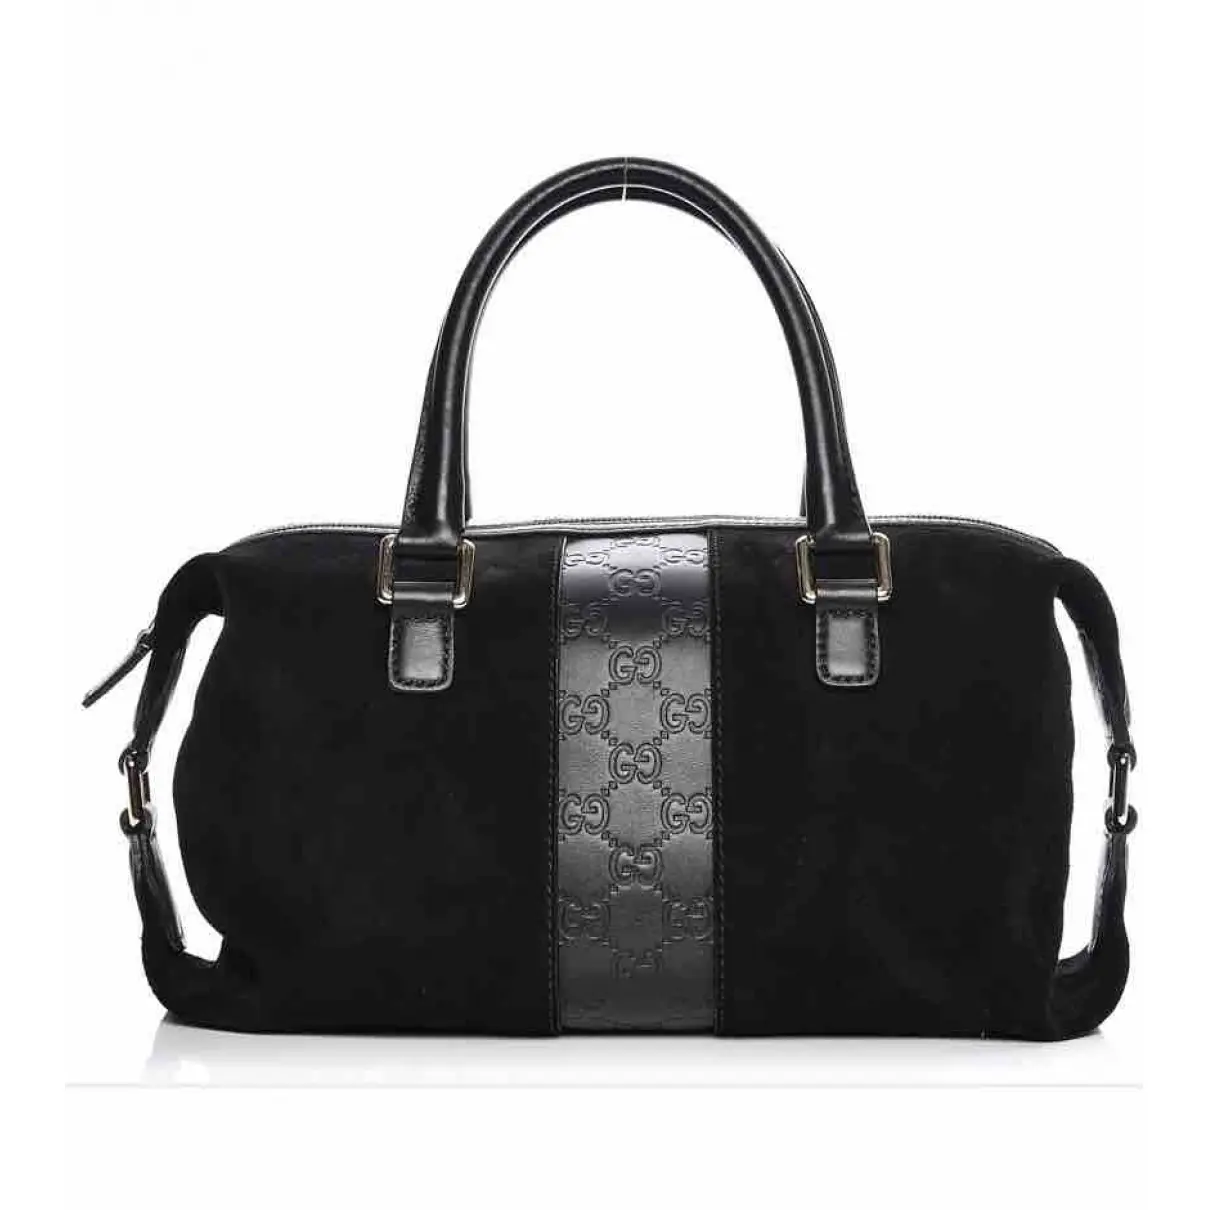 Buy Gucci Boston leather handbag online